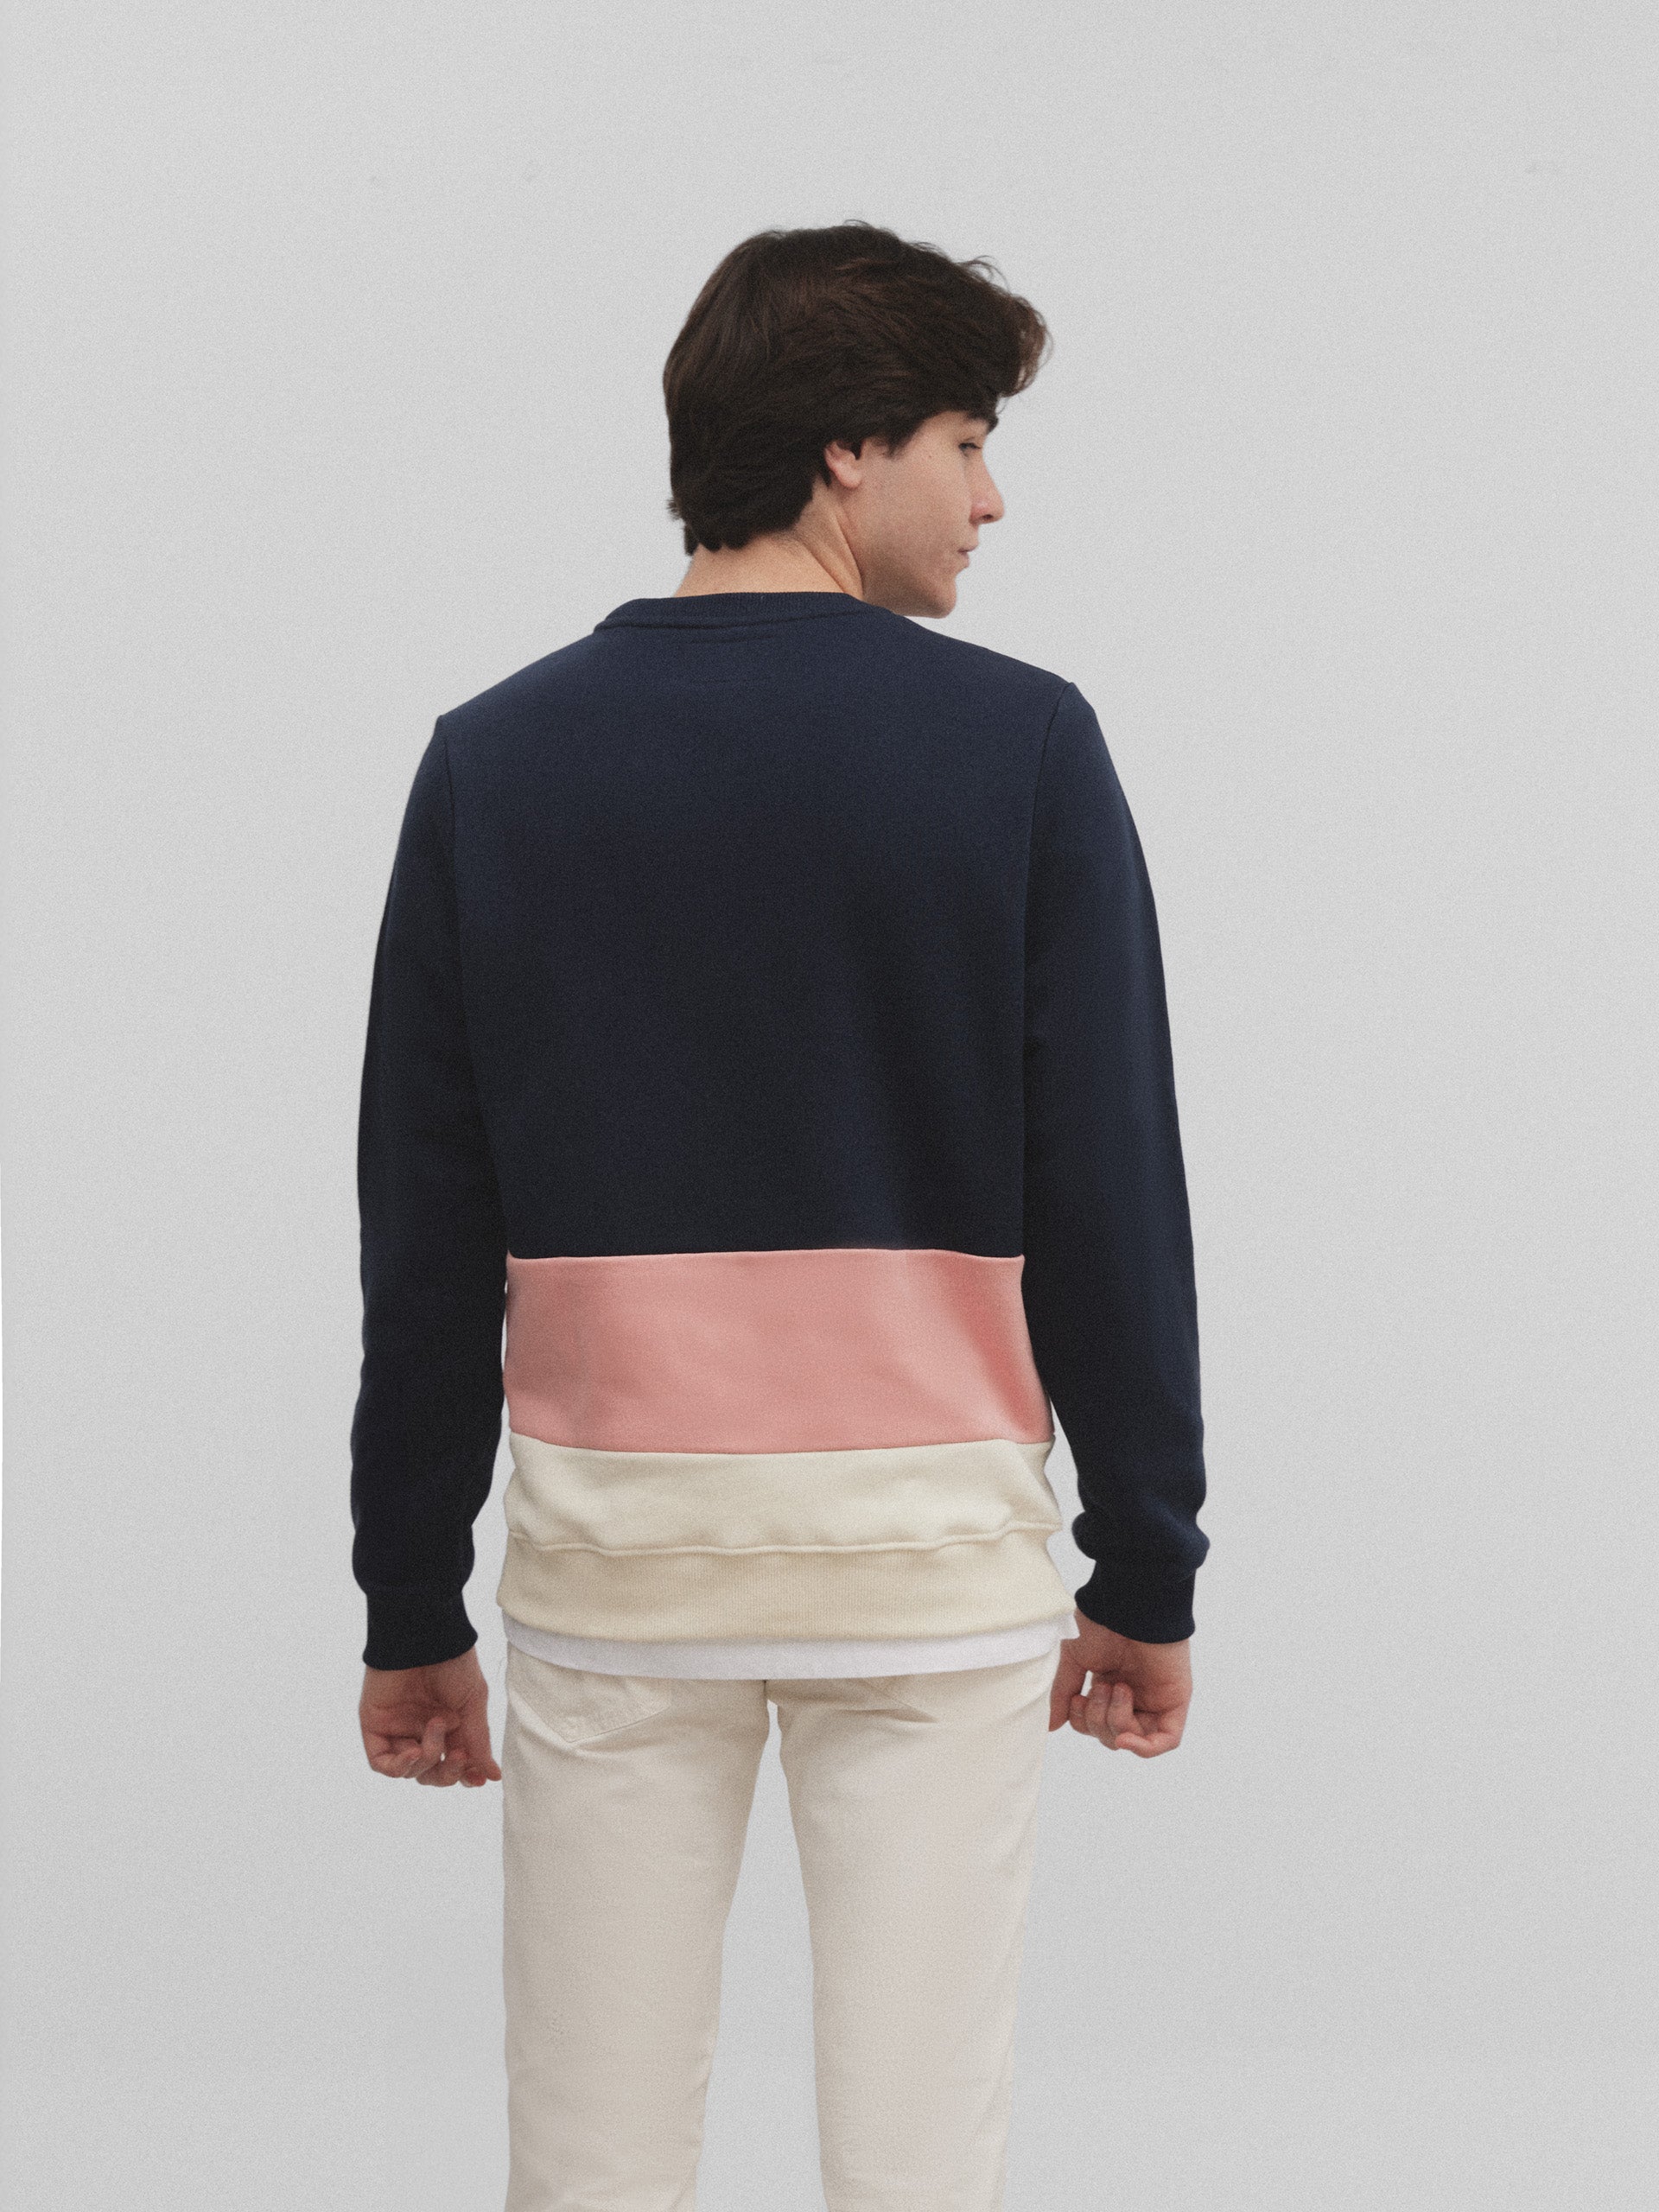 Blue horizontal striped sweatshirt